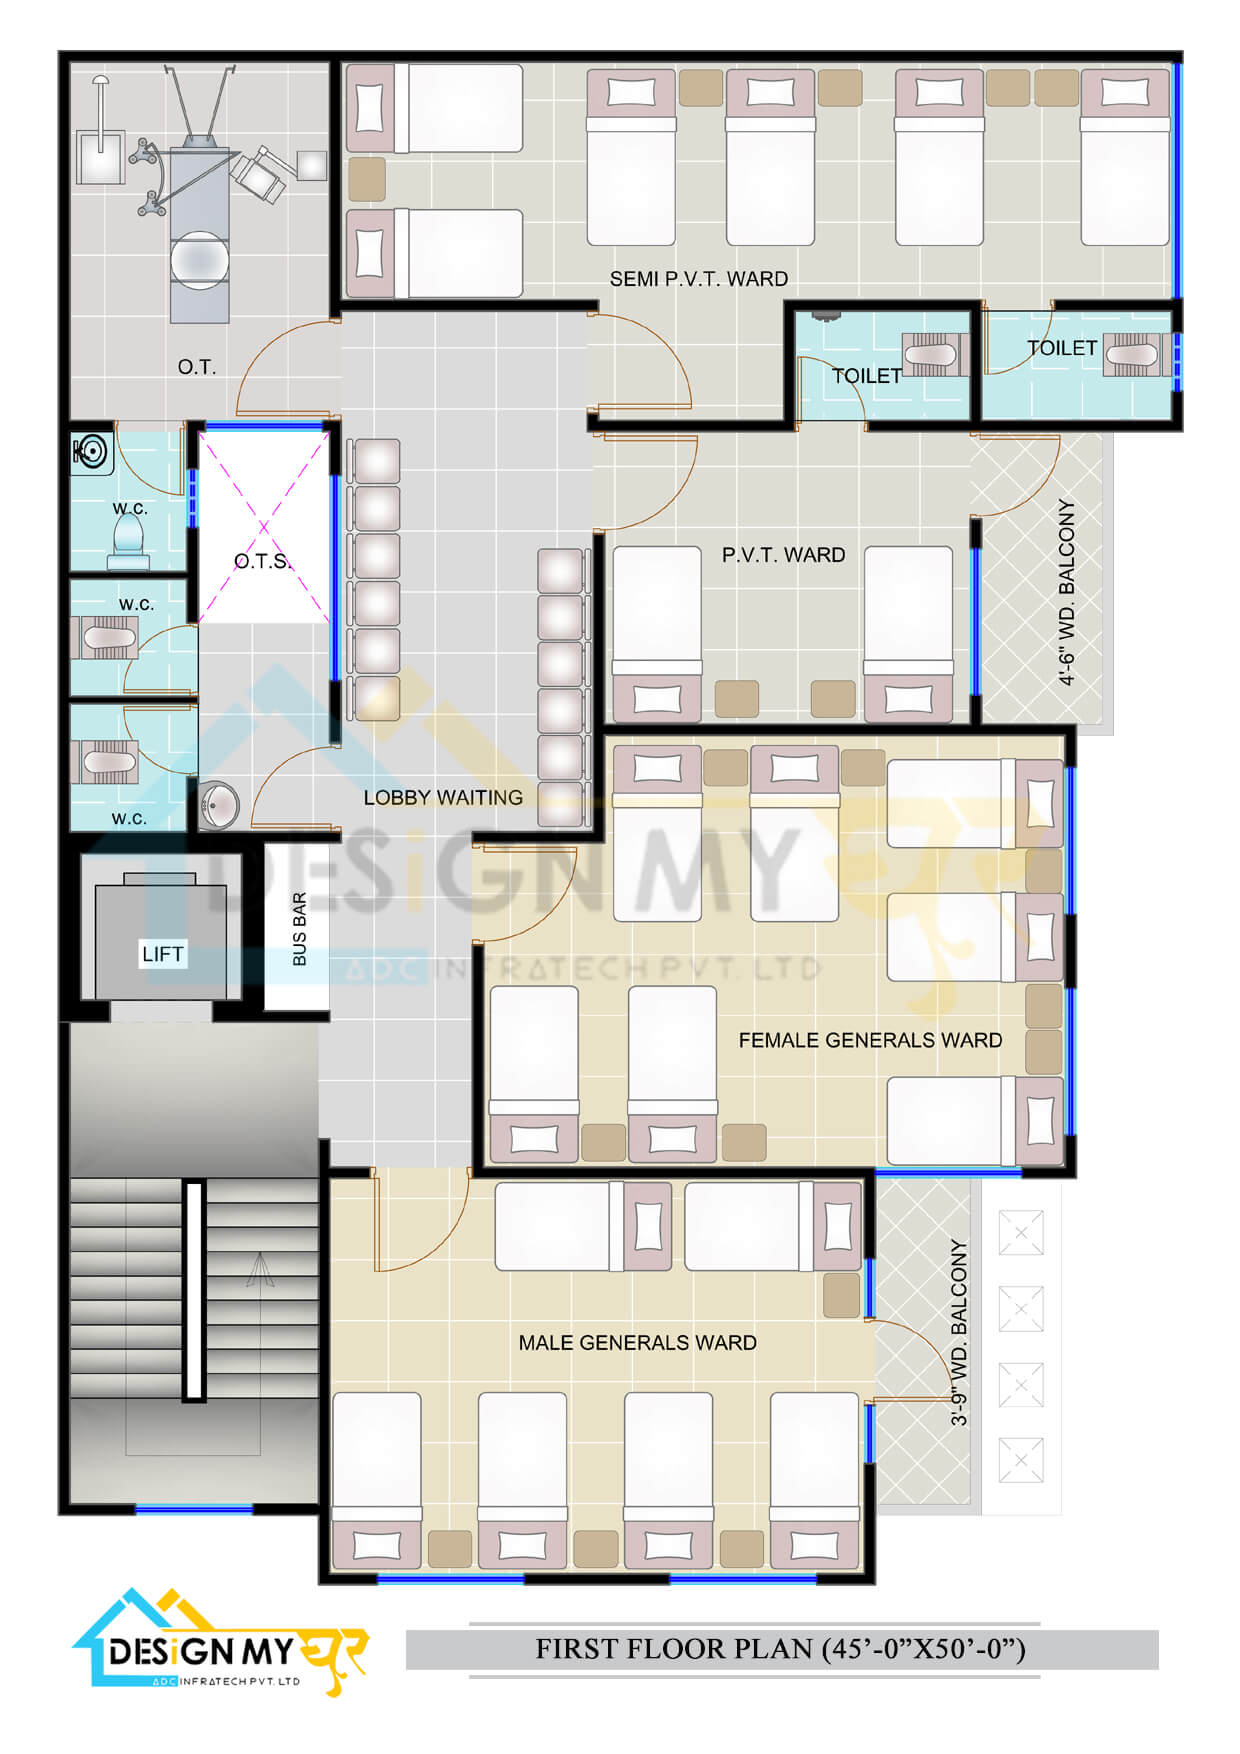 Schematic Floor Plan Definition - floorplans.click